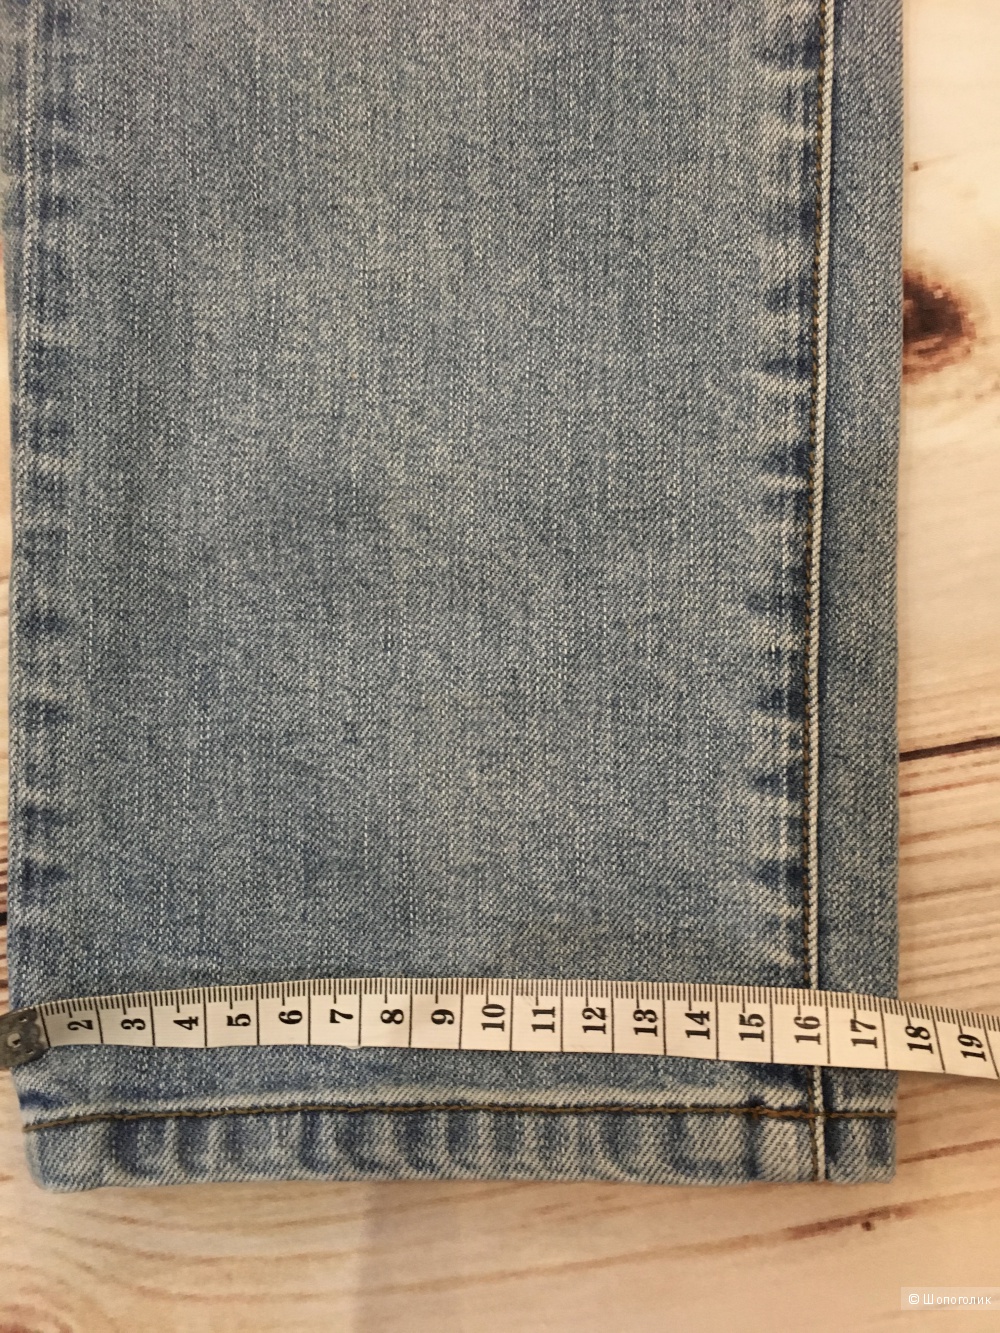 Мужские джинсы	COVERT. Размер: 30, на рос. 44